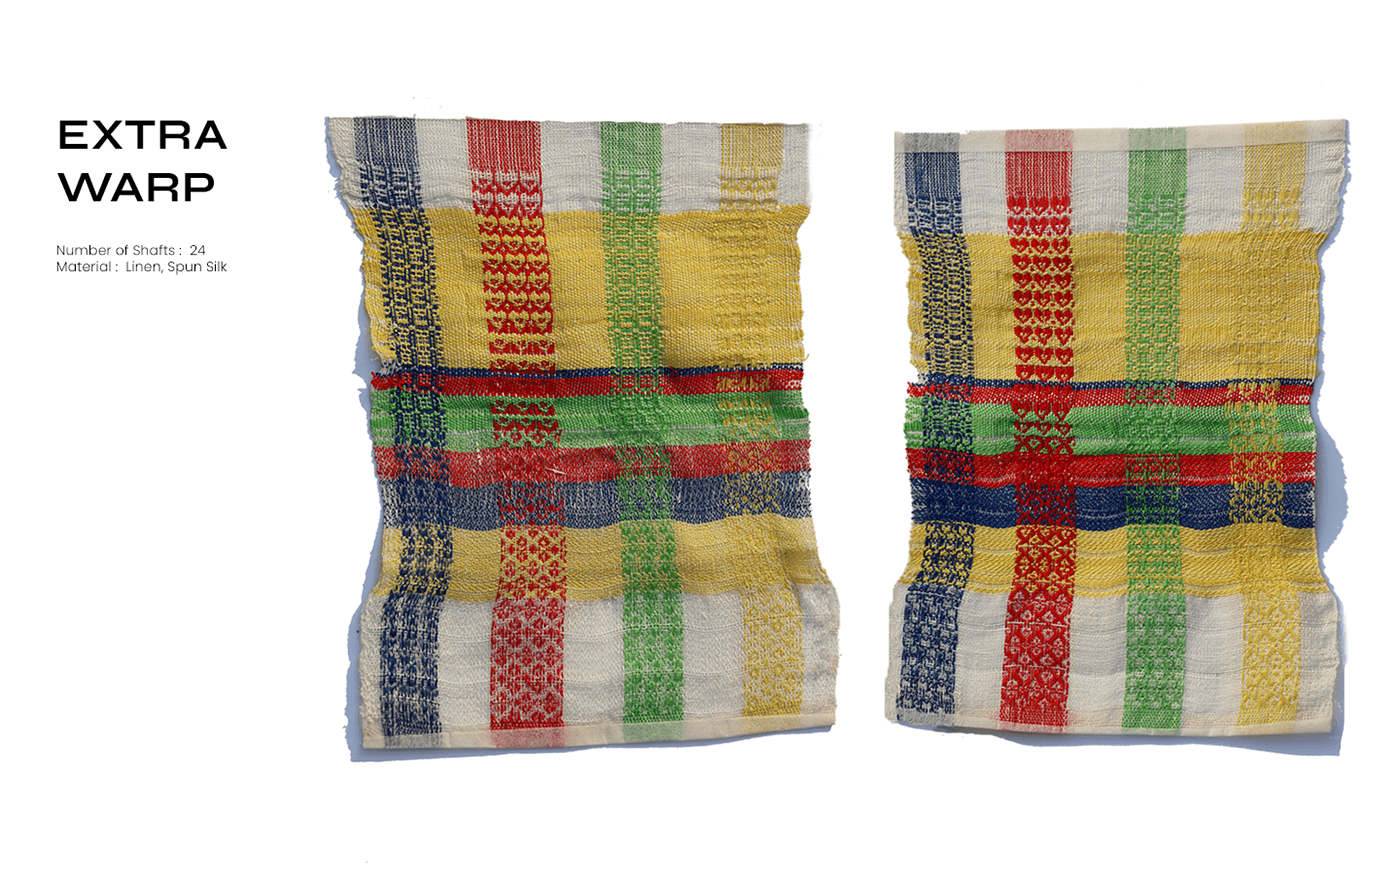 textile design  advanced weaving Dobby loom double cloth handloom handwoven weaving textile design